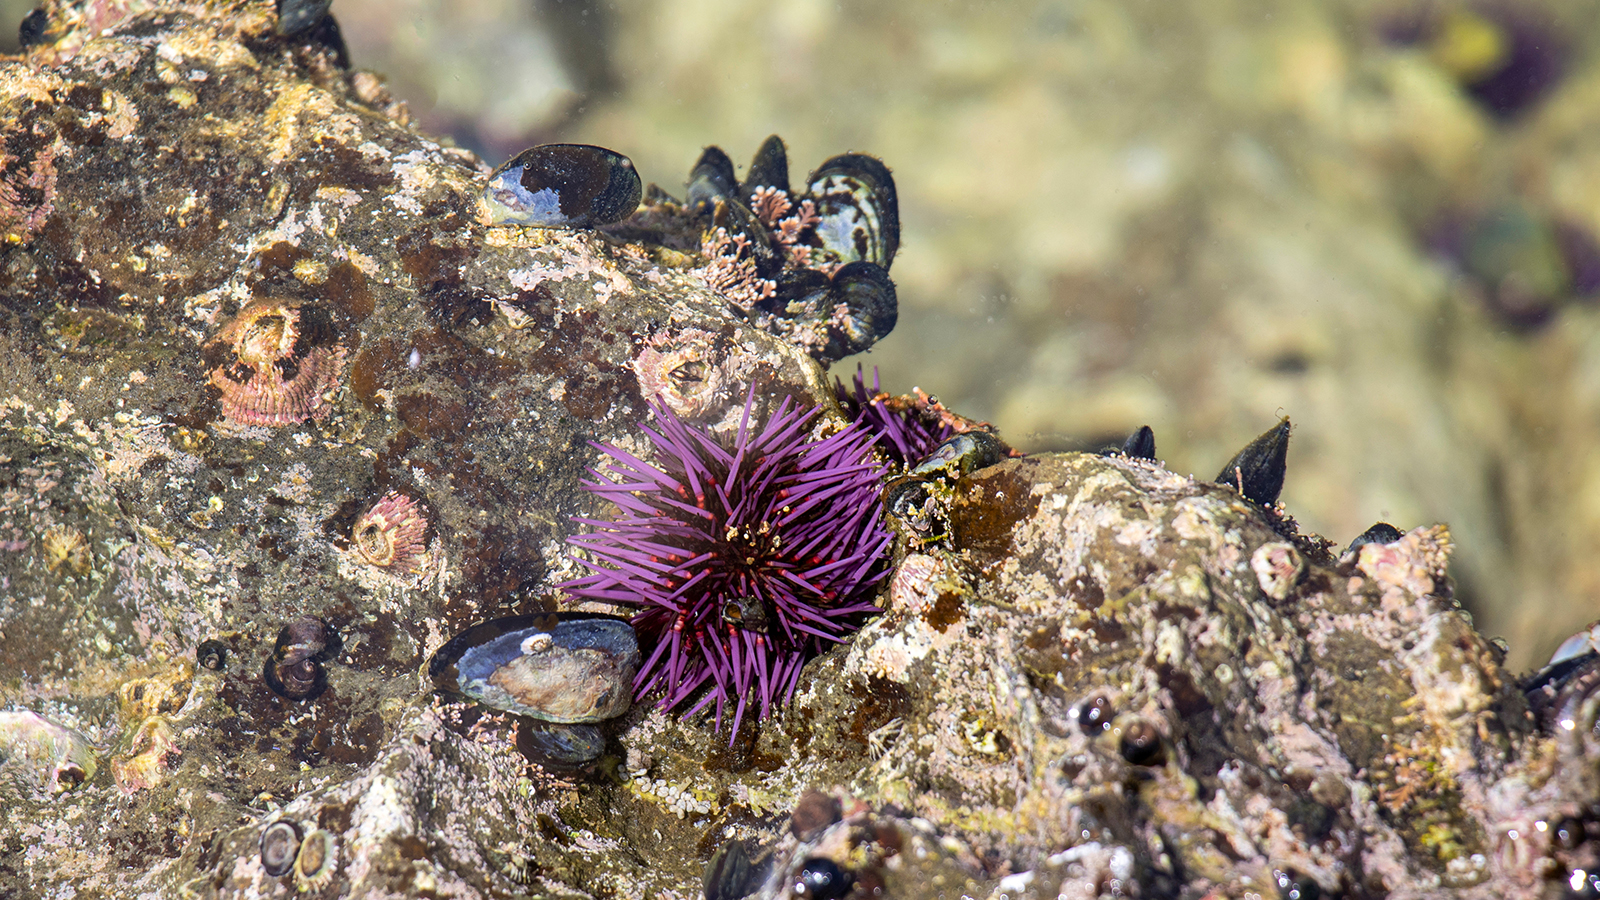 Purple urchin